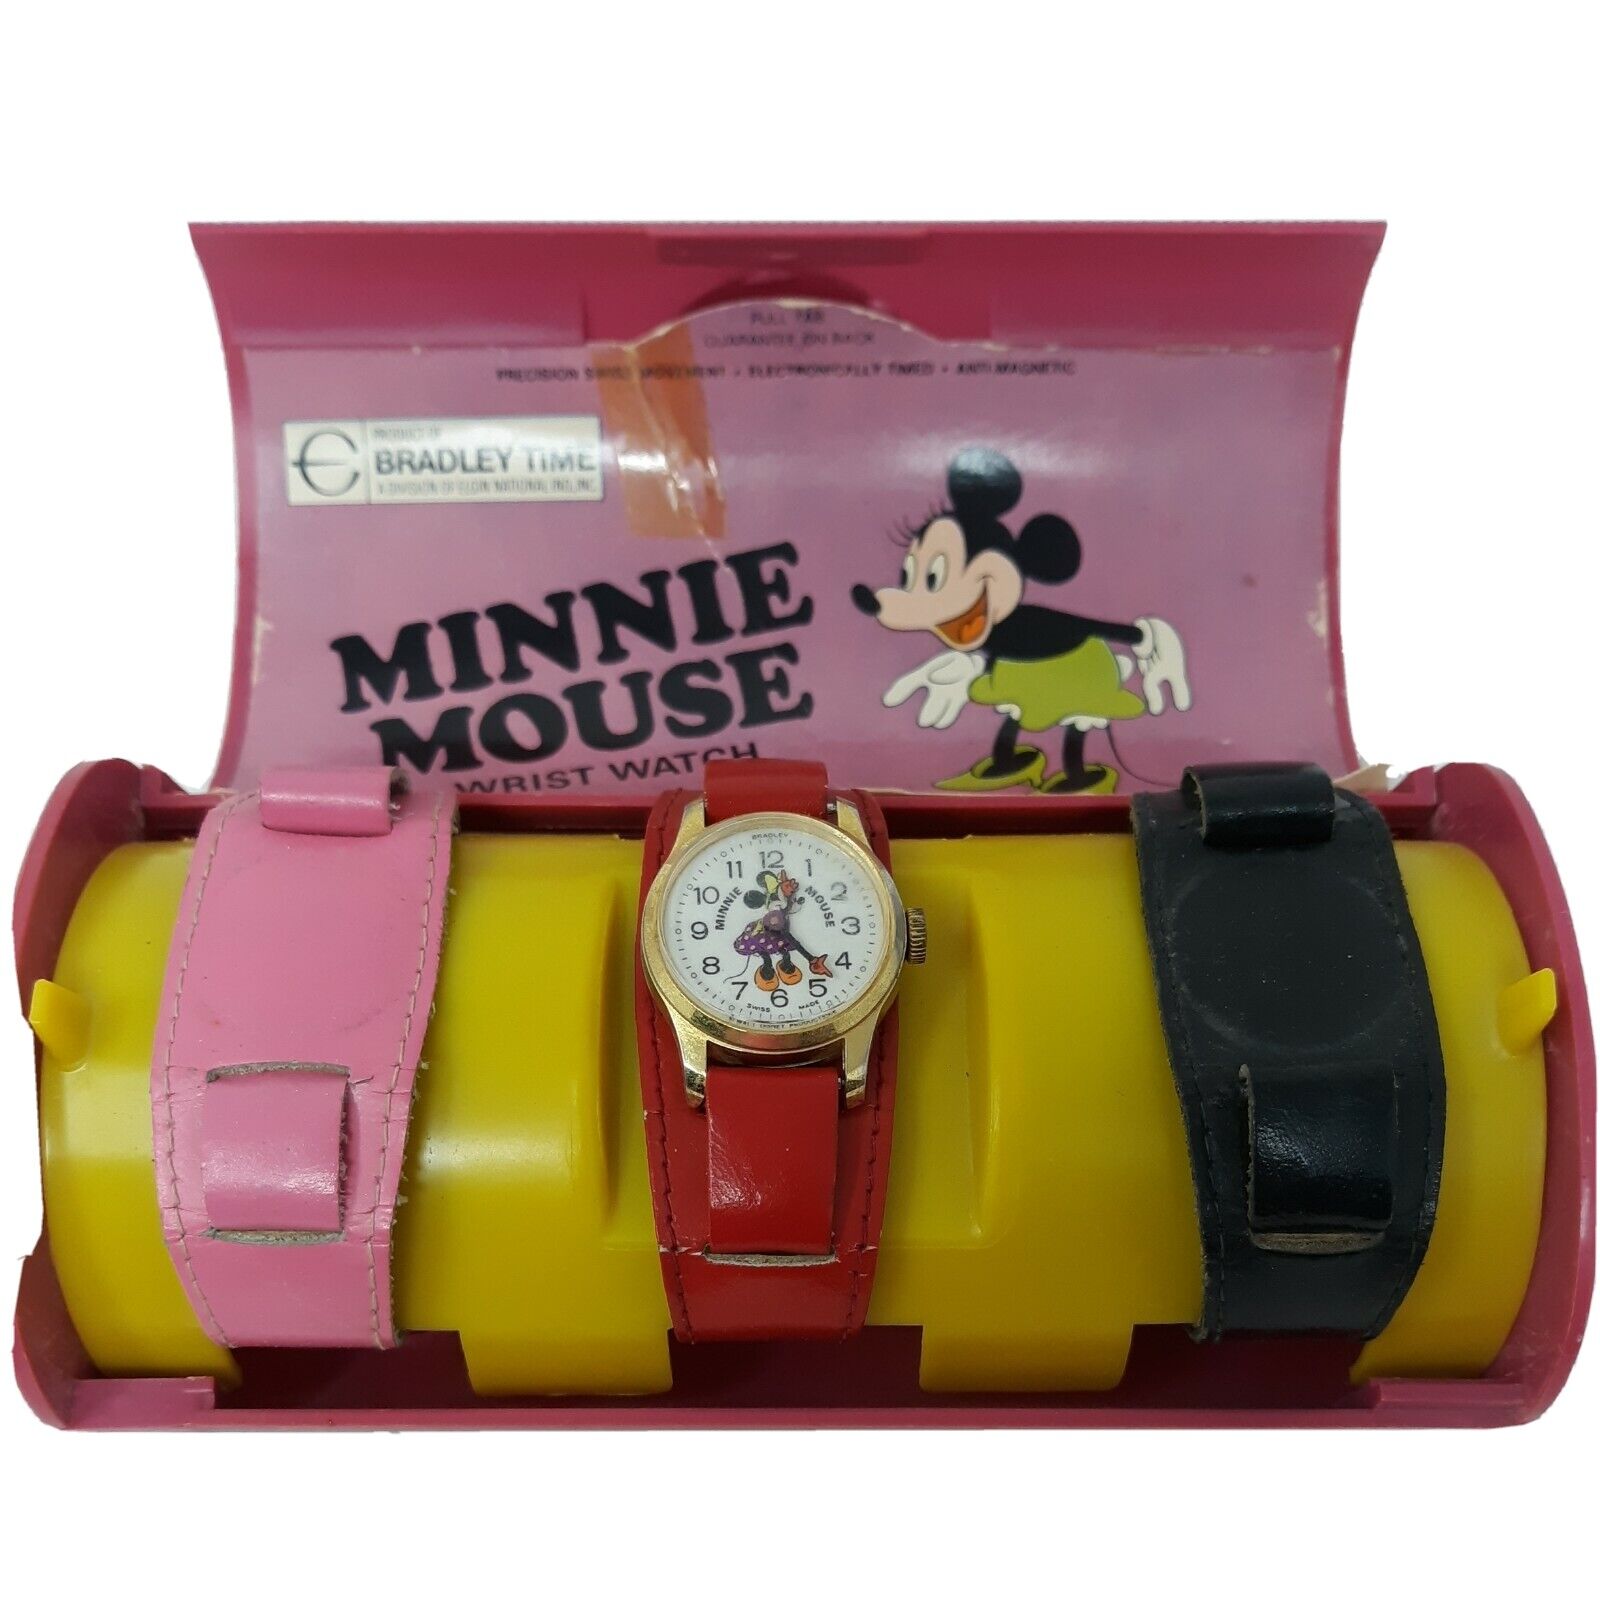 Vintage Minnie Mouse Wrist Watch in original case - Bradley Time Division